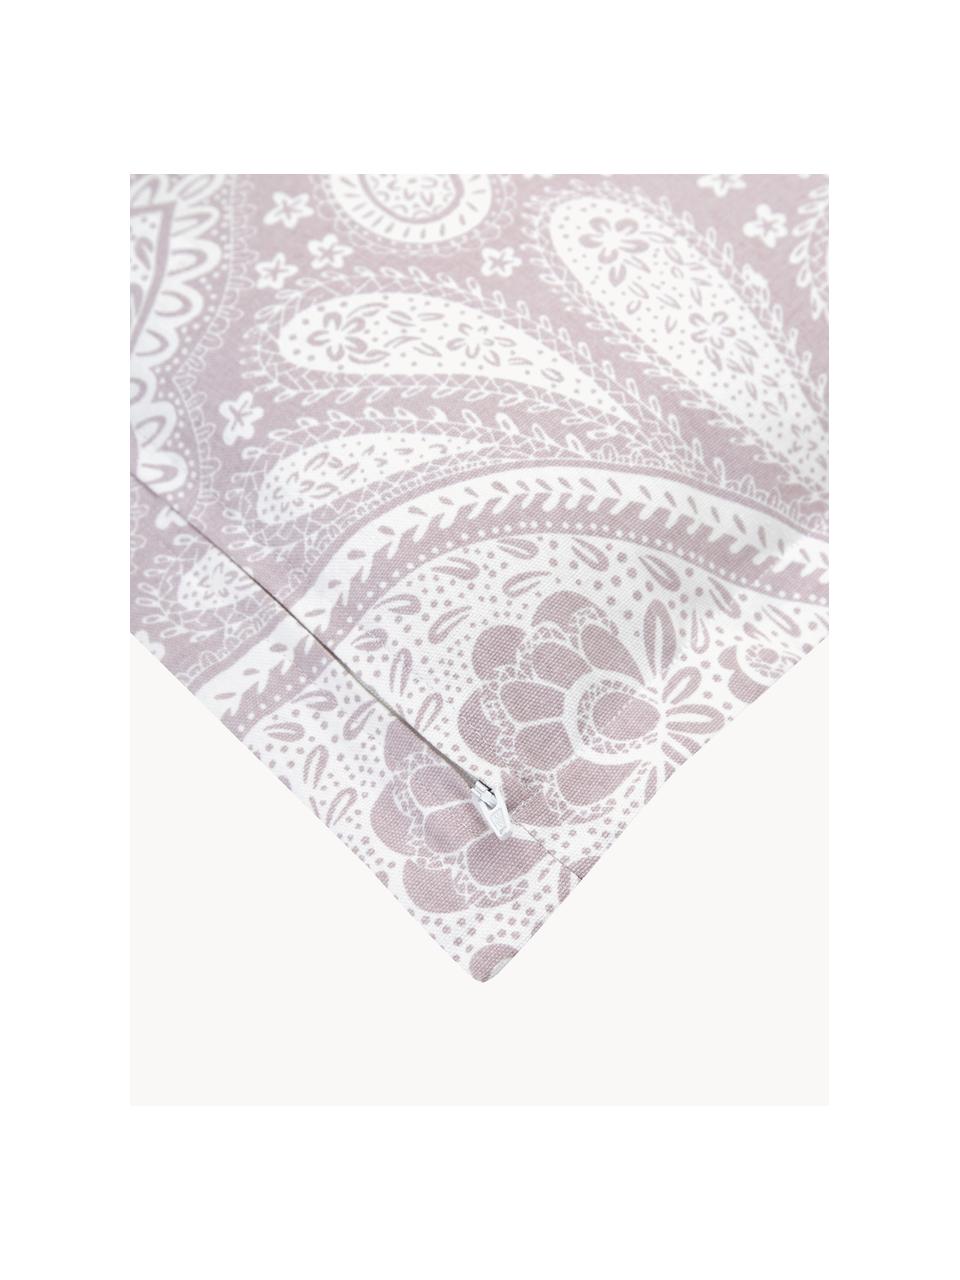 Kissenhülle Manon mit Paisley-Muster, 100% Bio-Baumwolle, GOTS-zertifiziert, Rosa, Weiß, B 45 x L 45 cm